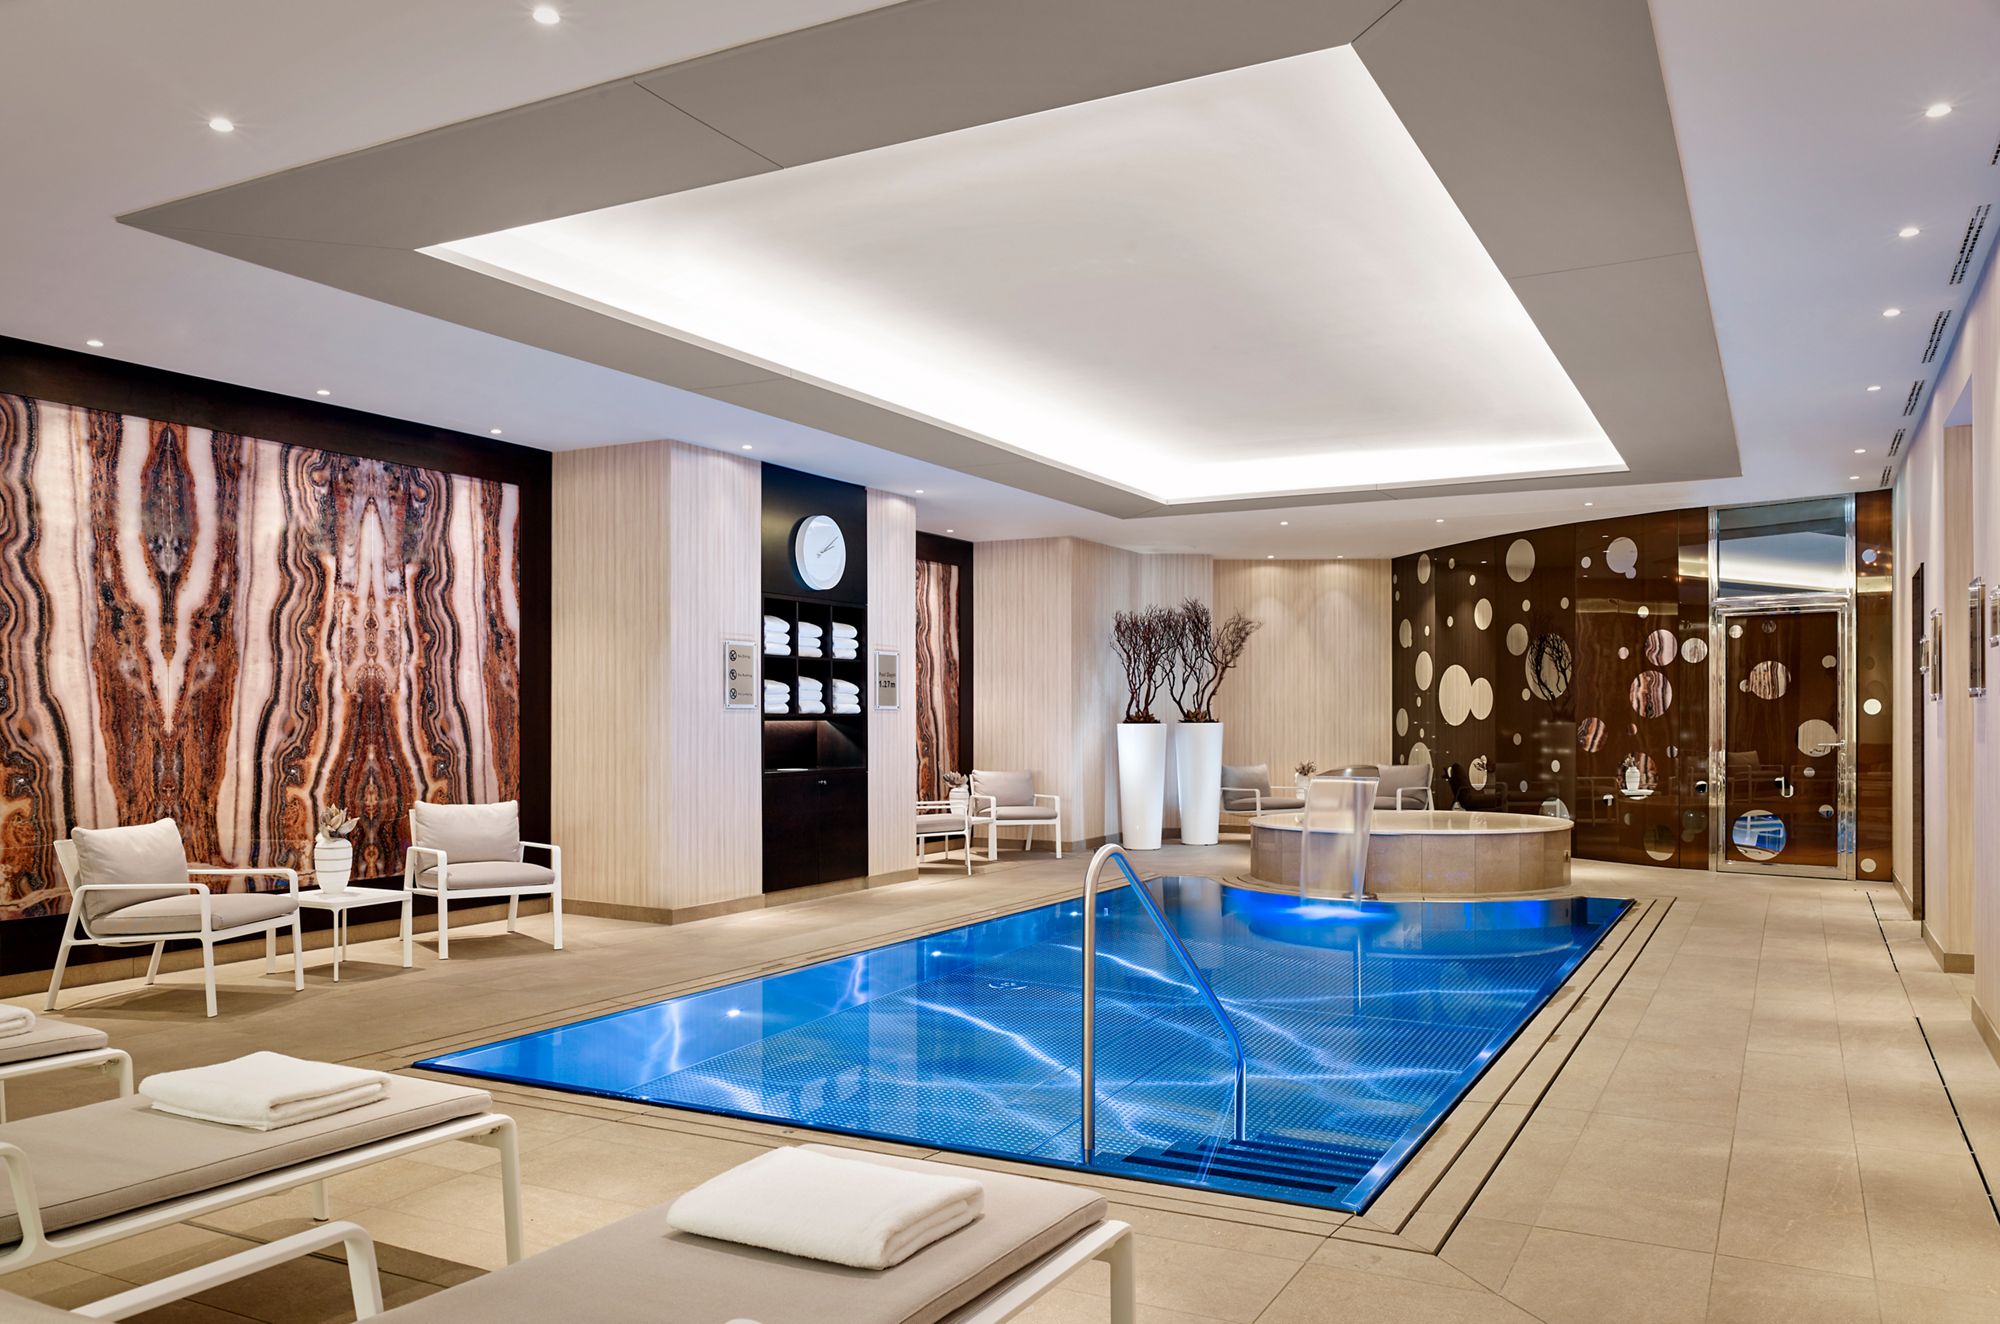 Ritz Carlton Berlin stainless steel pool IMAGINOX